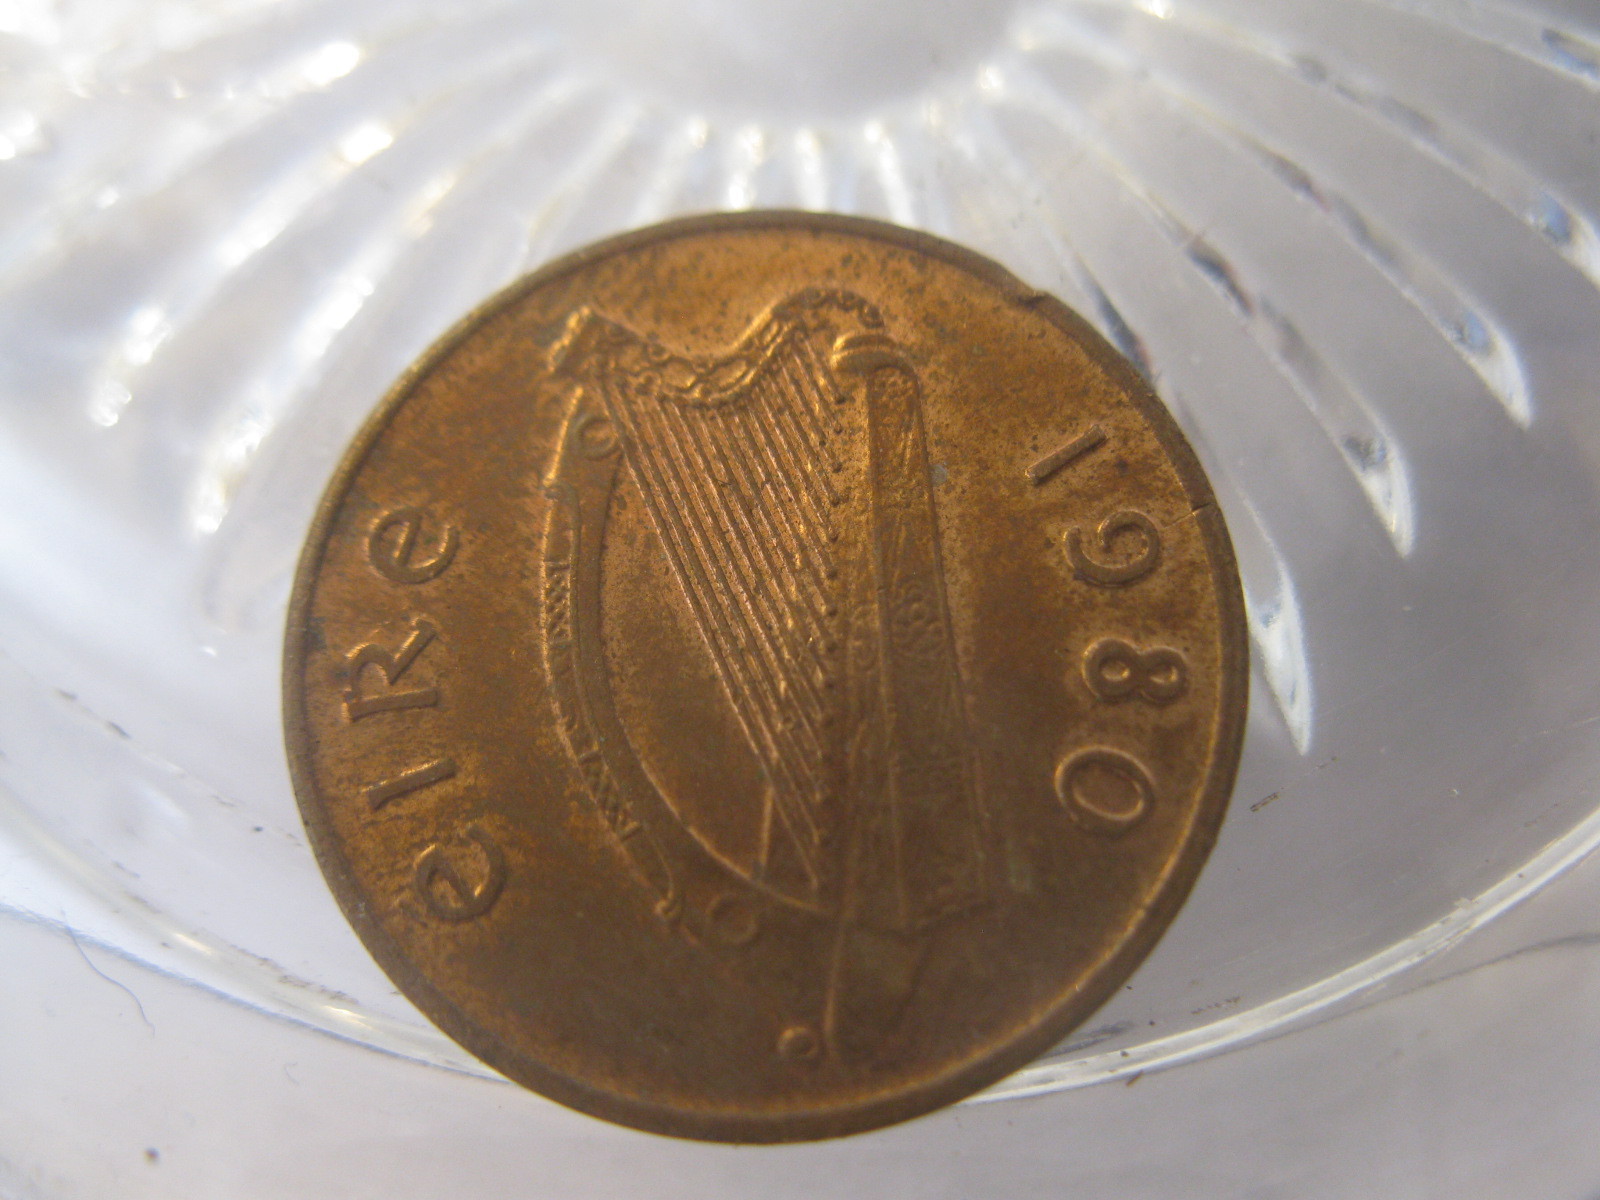 (FC-1323) 1980 Ireland: 1 Penny - $1.25